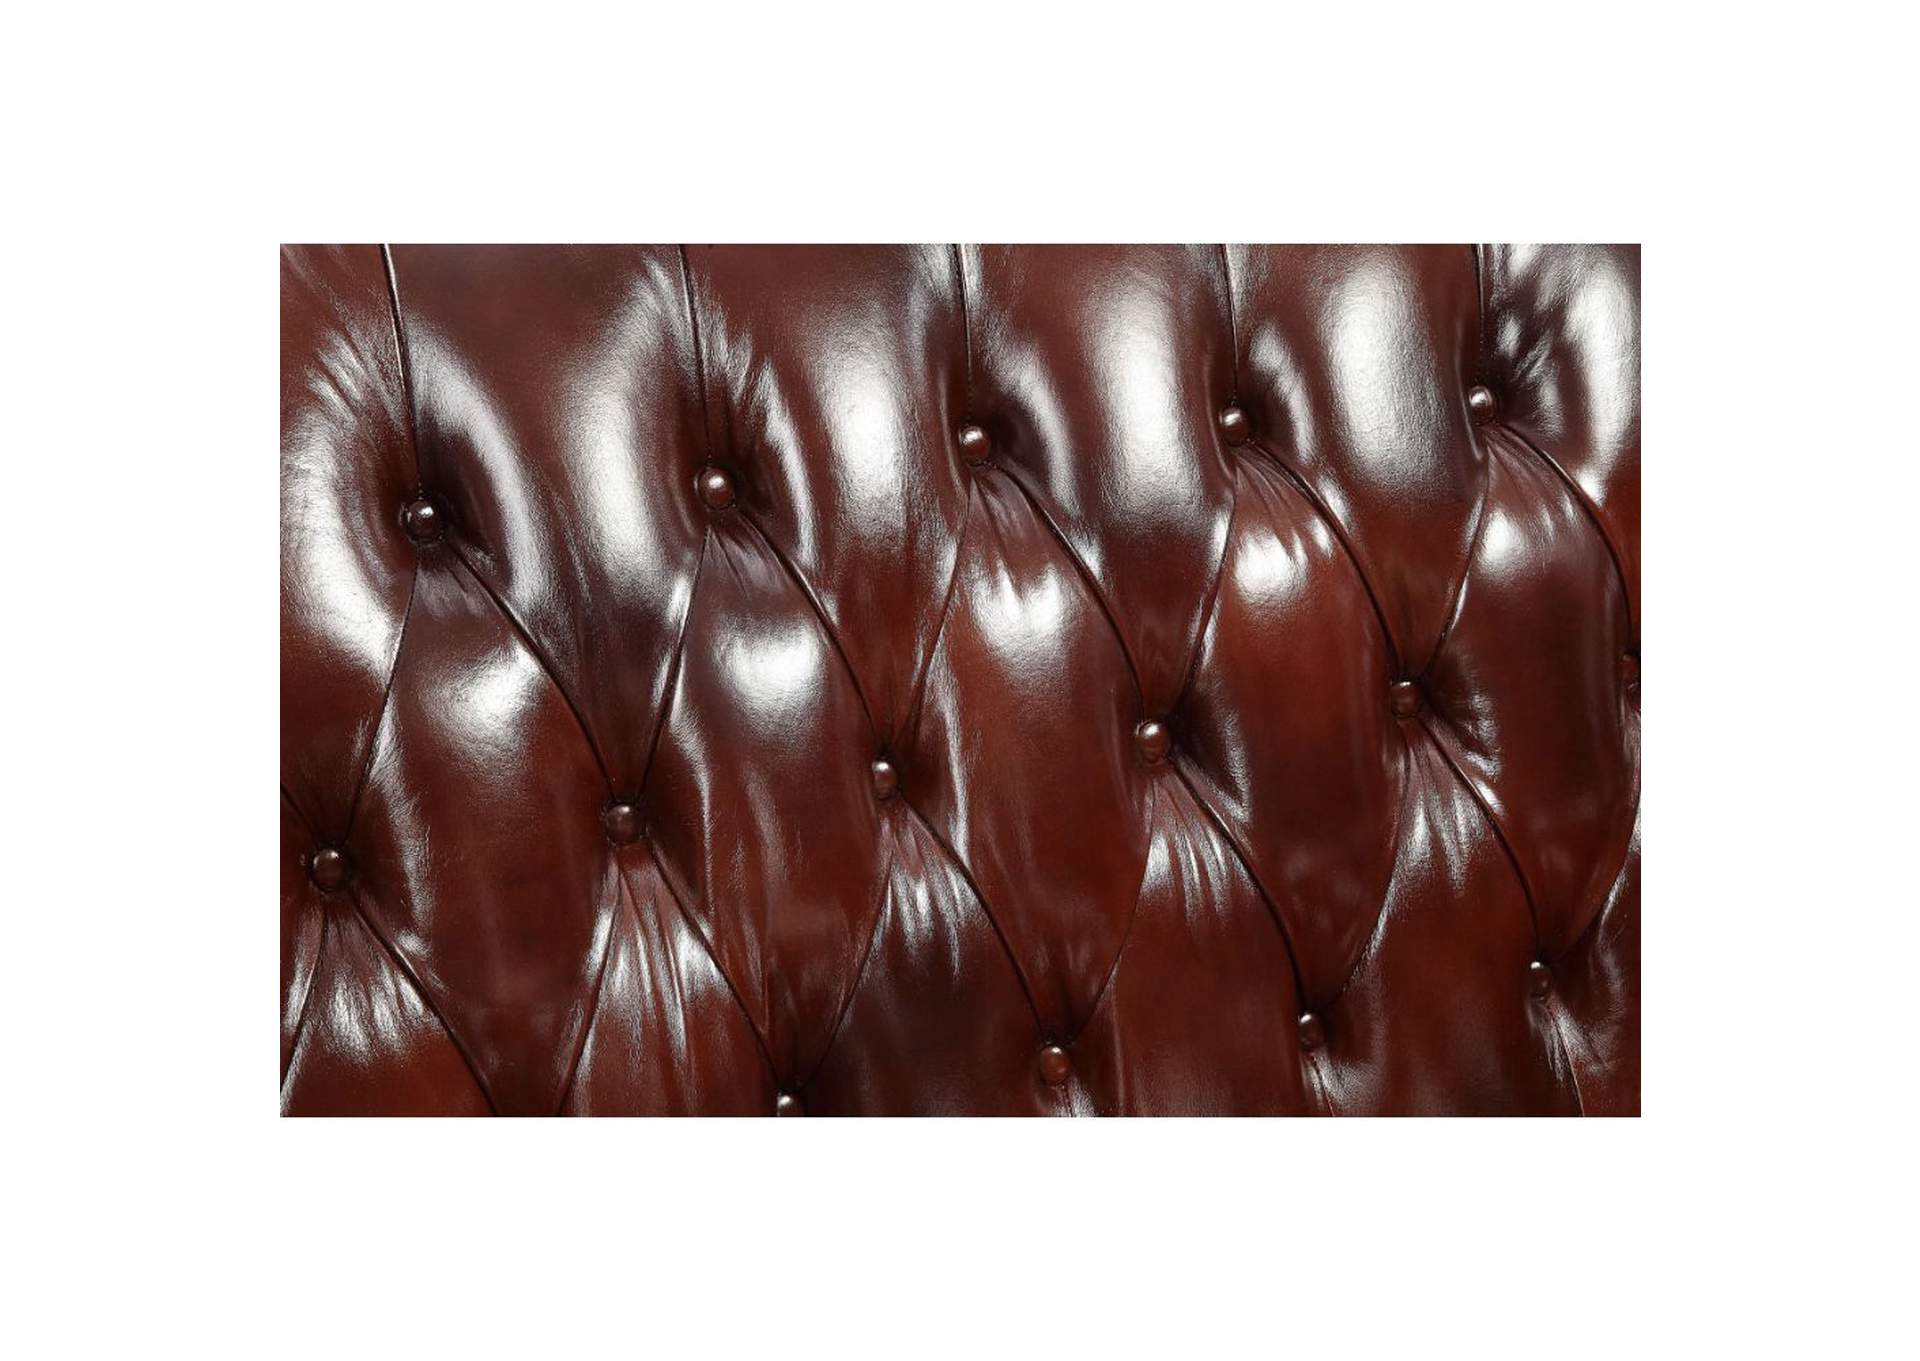 Eustoma Cherry Top Grain Leather Match & Walnut Chair,Acme